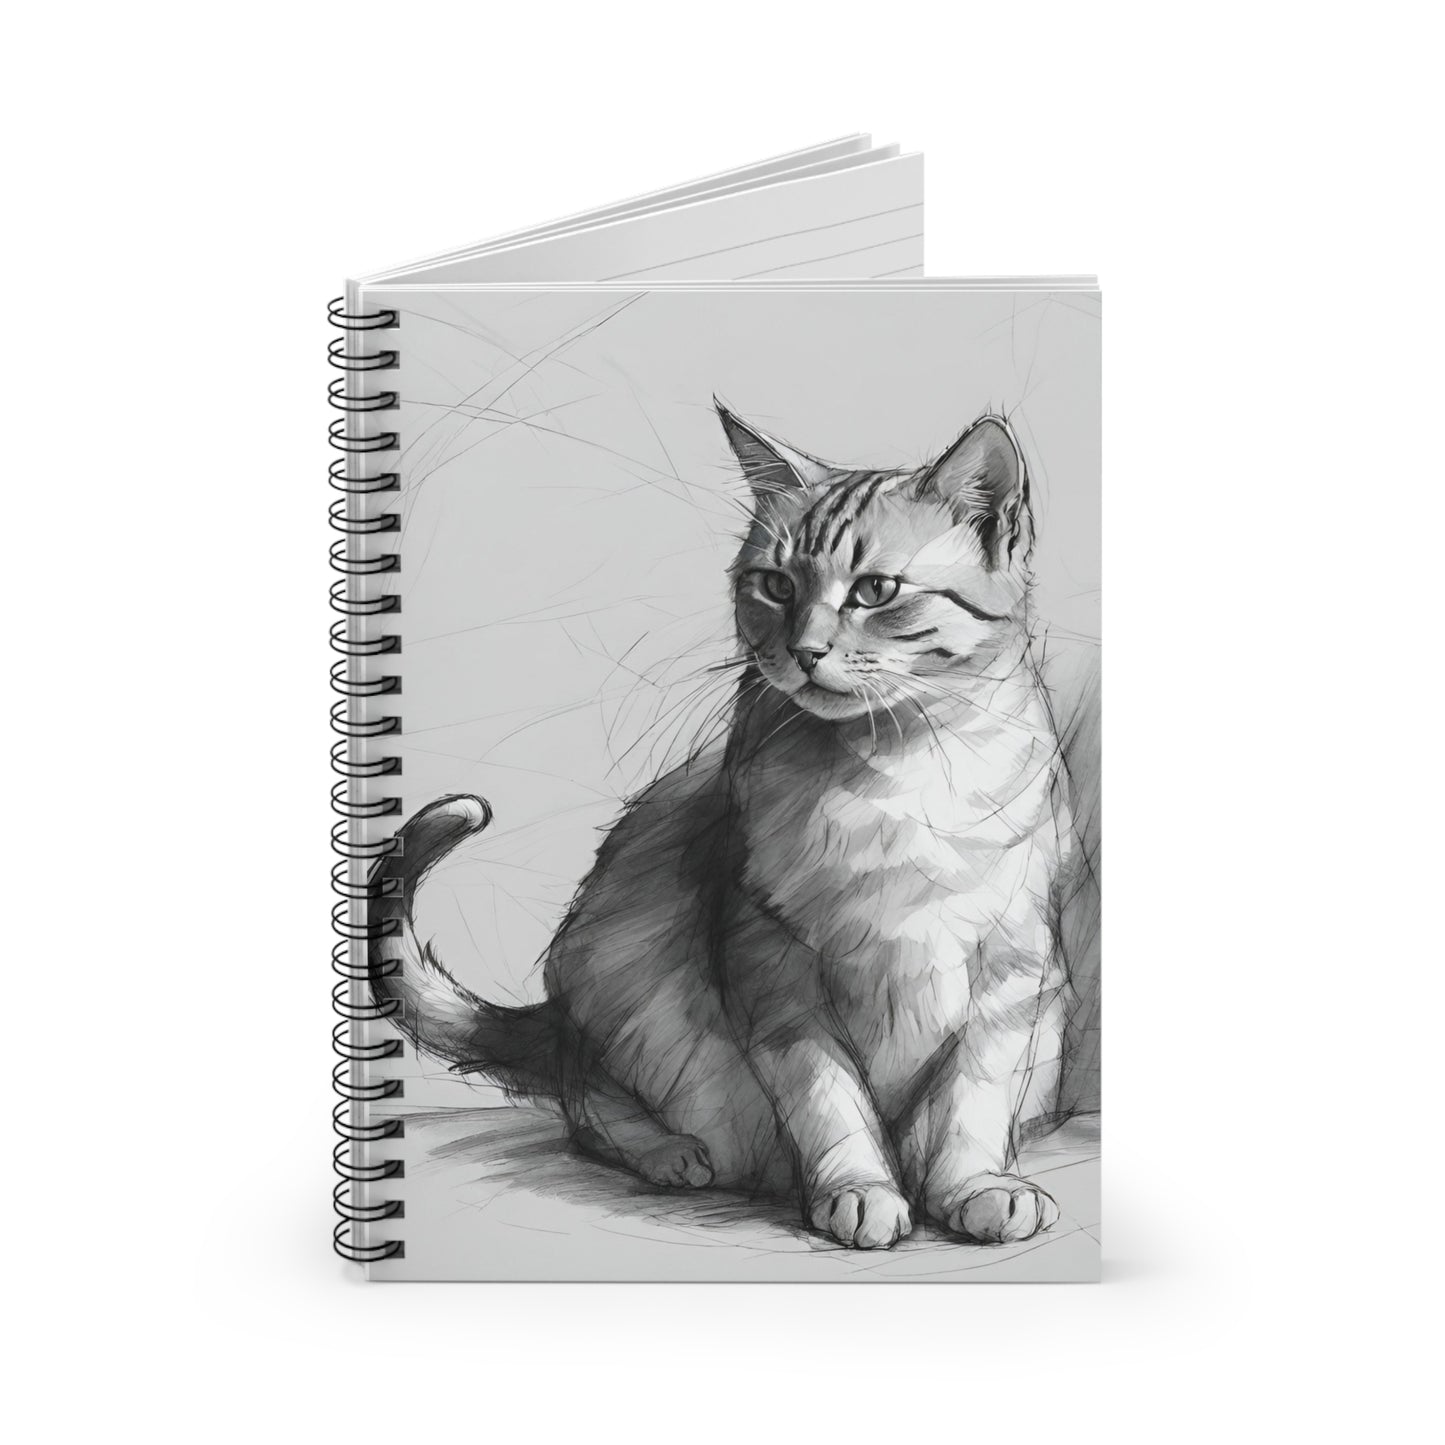 Cat Spiral Notebook - Ruled Line